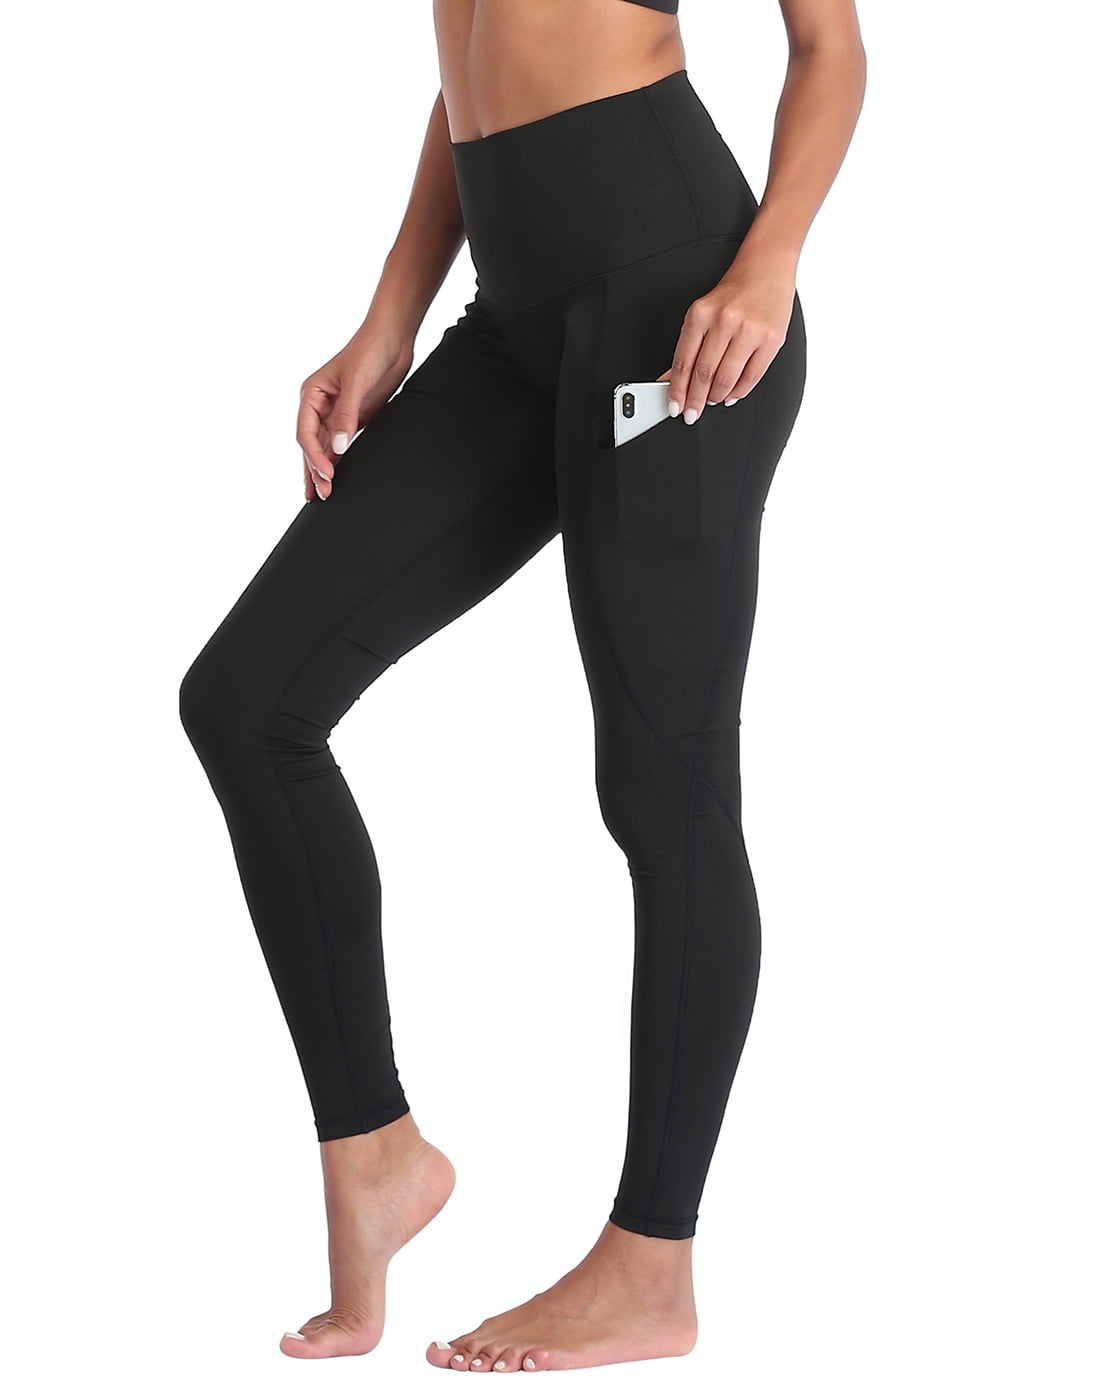 Leggings with Pockets Tummy Control High Waist Yoga Pant Yoga Pants for Women